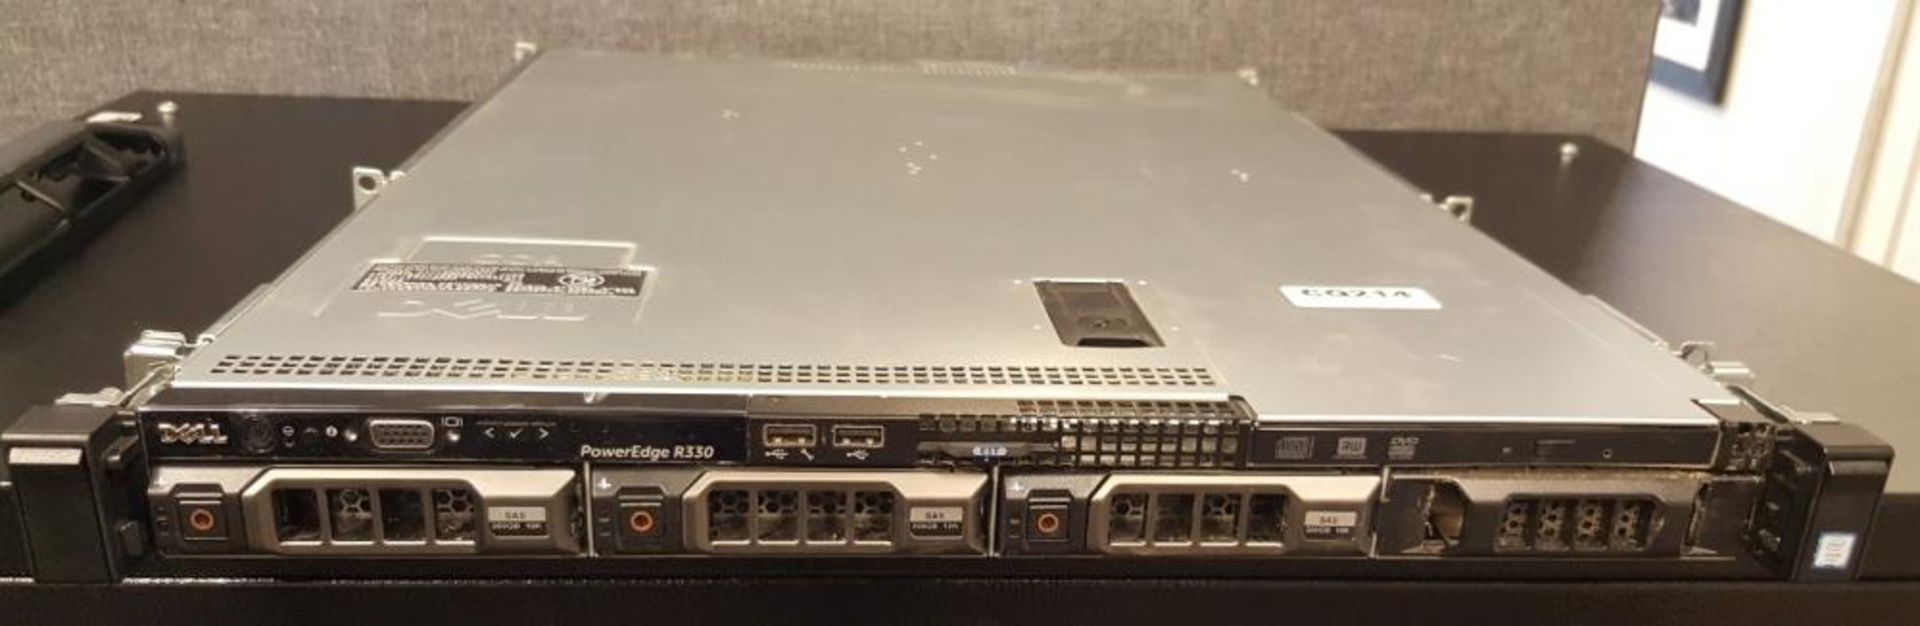 1 x Dell PowerEdge R330 1U Rack Server With Intel Xeon E3-1220V6 3 GHz &amp; 32GB RAM - Ref CQ214 - - Image 5 of 10